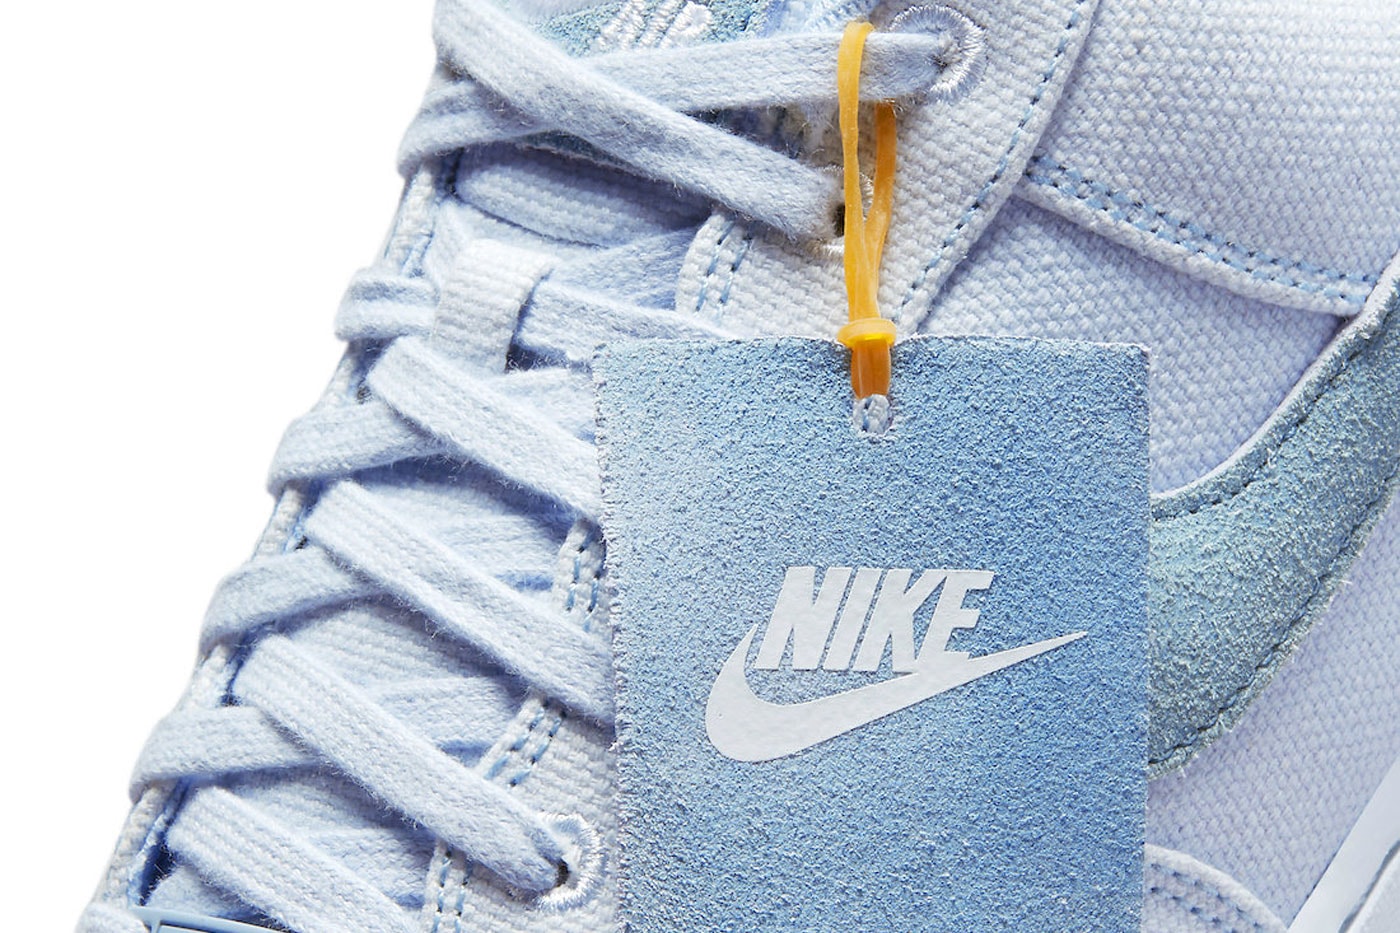 Nike Men Air Force 1 '07 Lv8 (football grey / multi-color-hydrogen blue)